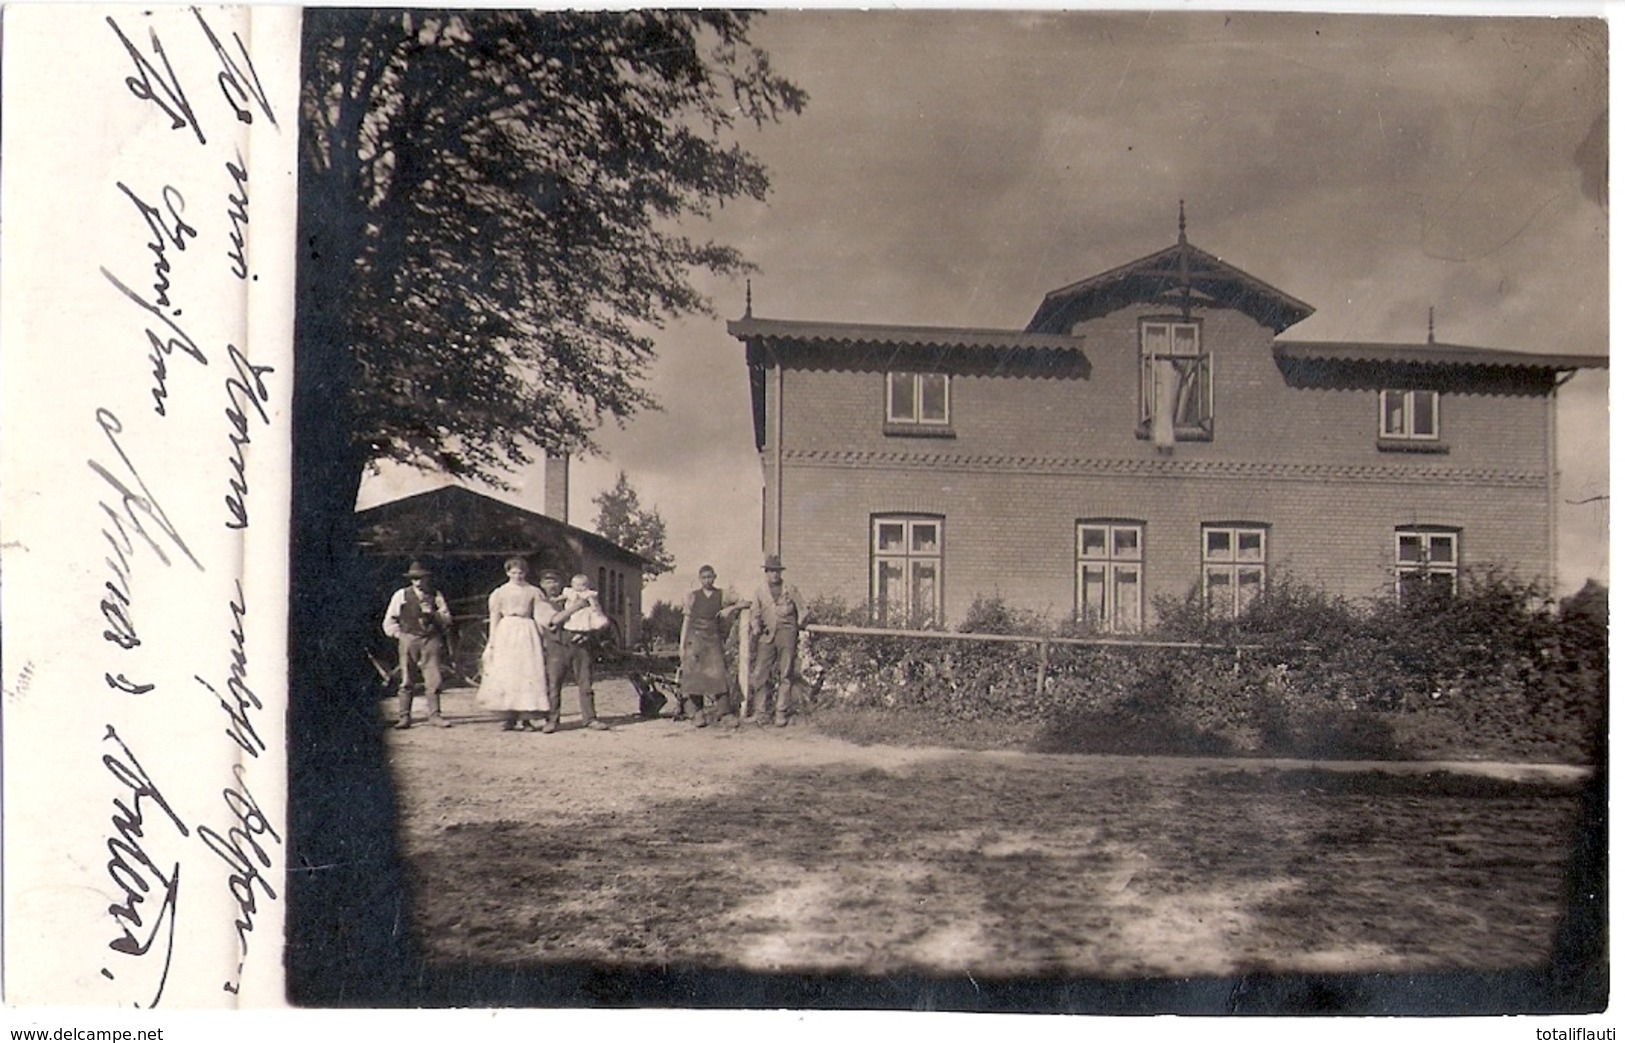 NÜTZEN Kr Segeberg Bauern Gehöft Familie Davor Bahnpost ZUG 4 ALTONA Original Private Fotokarte Gelaufen 22.7.1912 - Bad Segeberg